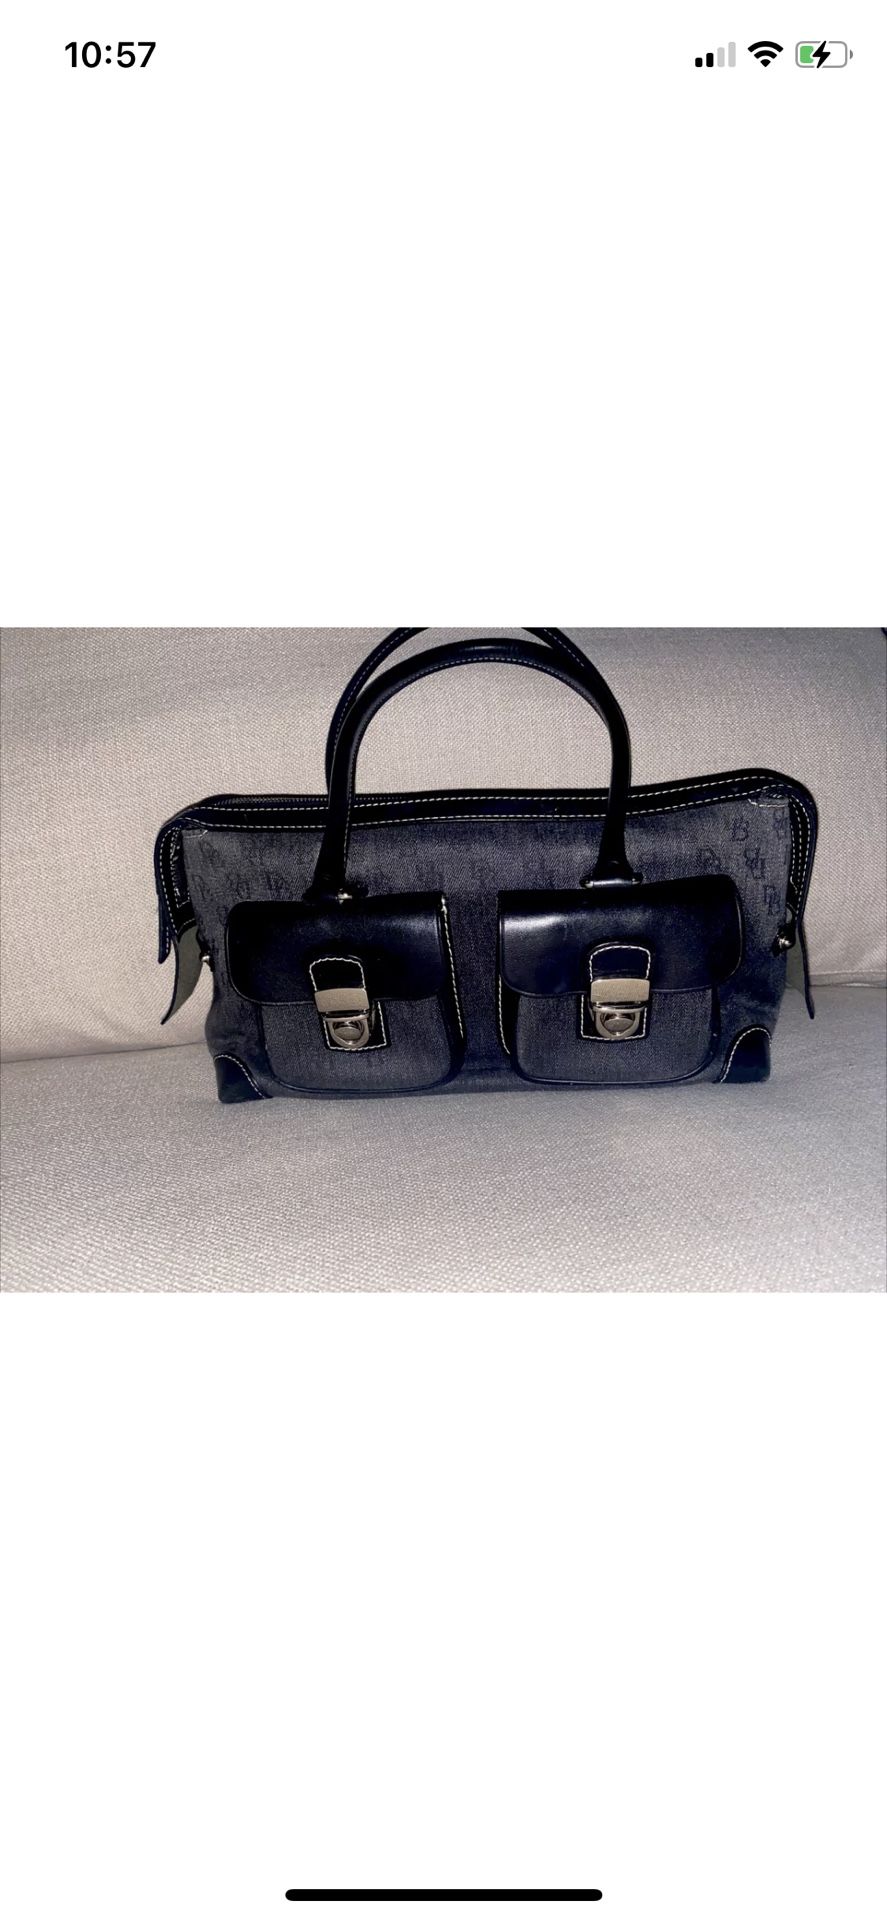 Dooney Bourke Handbag Purse Double Pocket Tote Bag Black Denim Jean Leather LNC